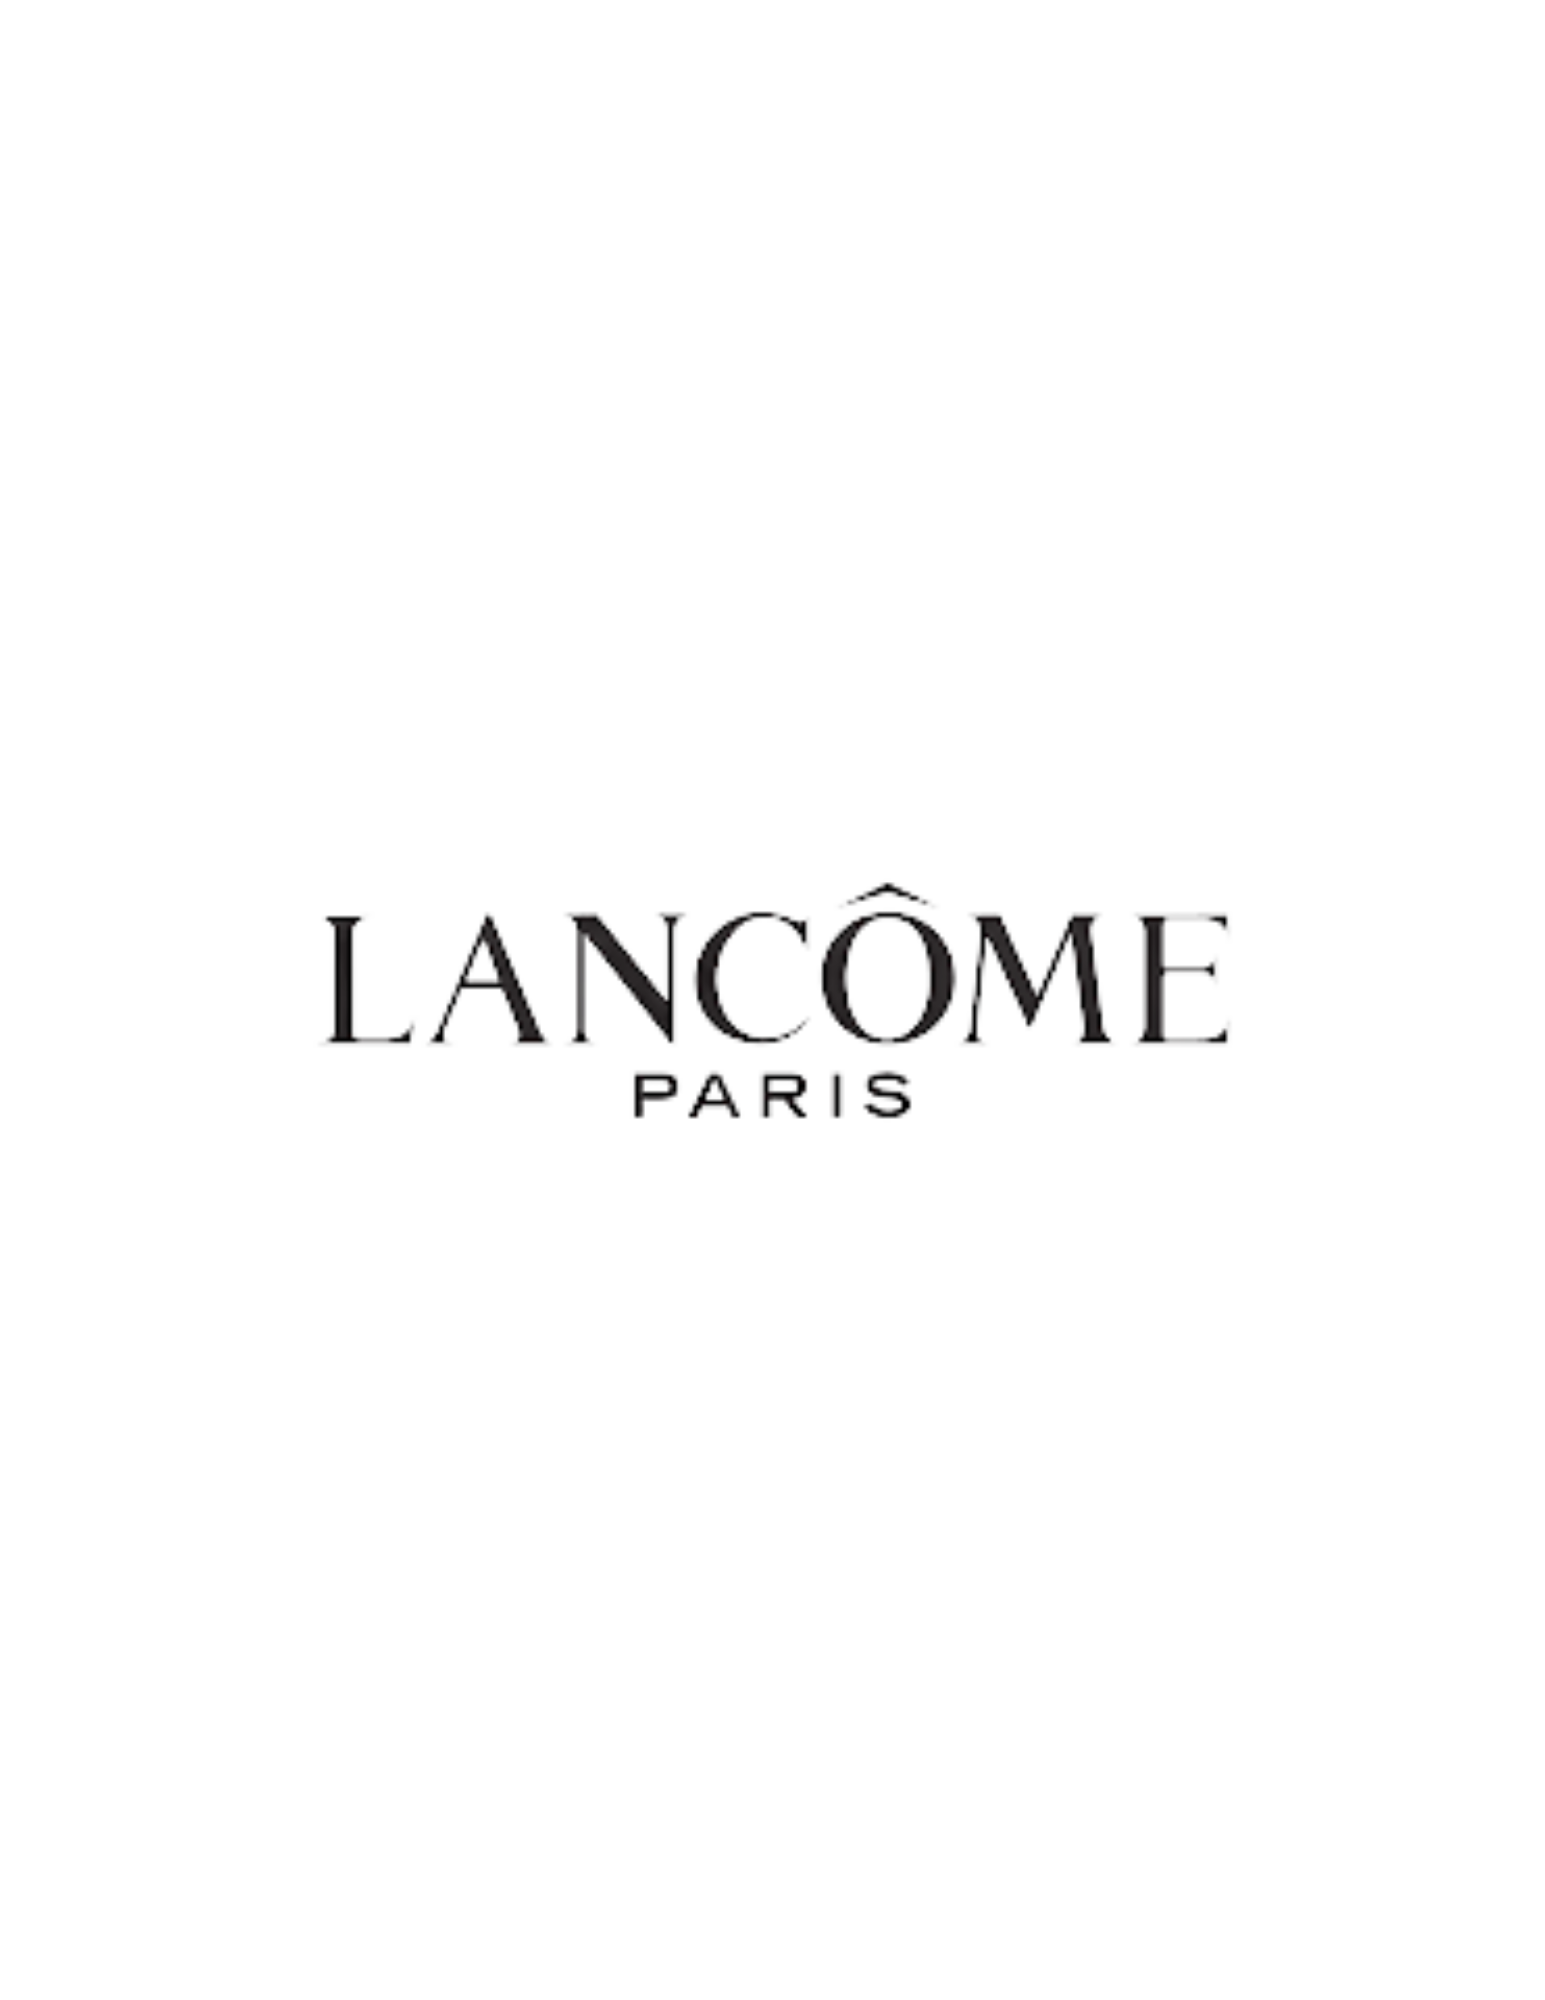 Lancome